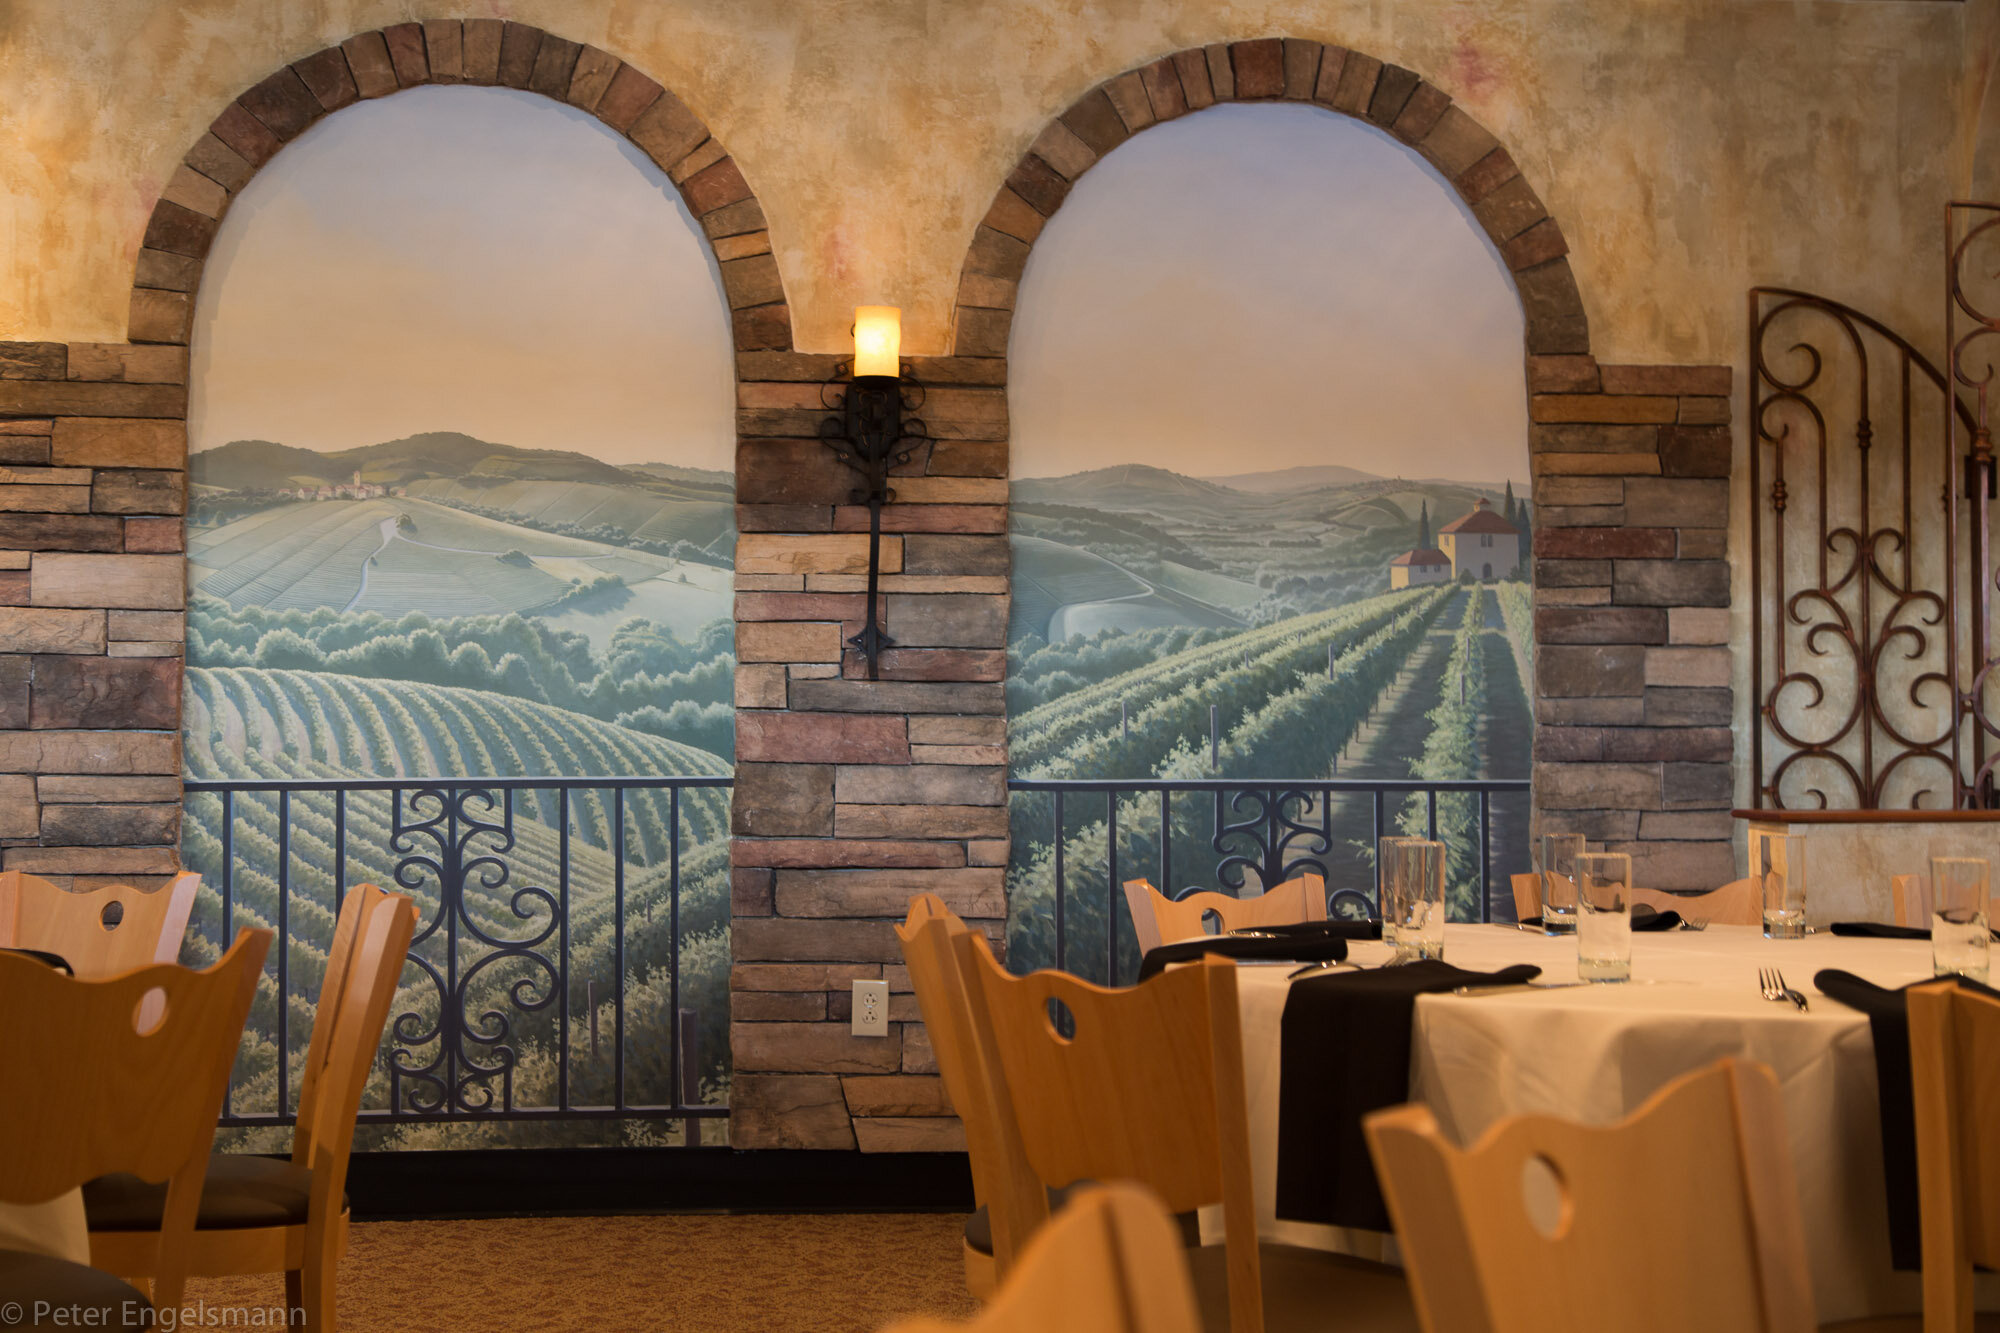  Restaurant Vineyard Mural, acrylic on wallboard, private residence. © Peter K. Engelsmann 